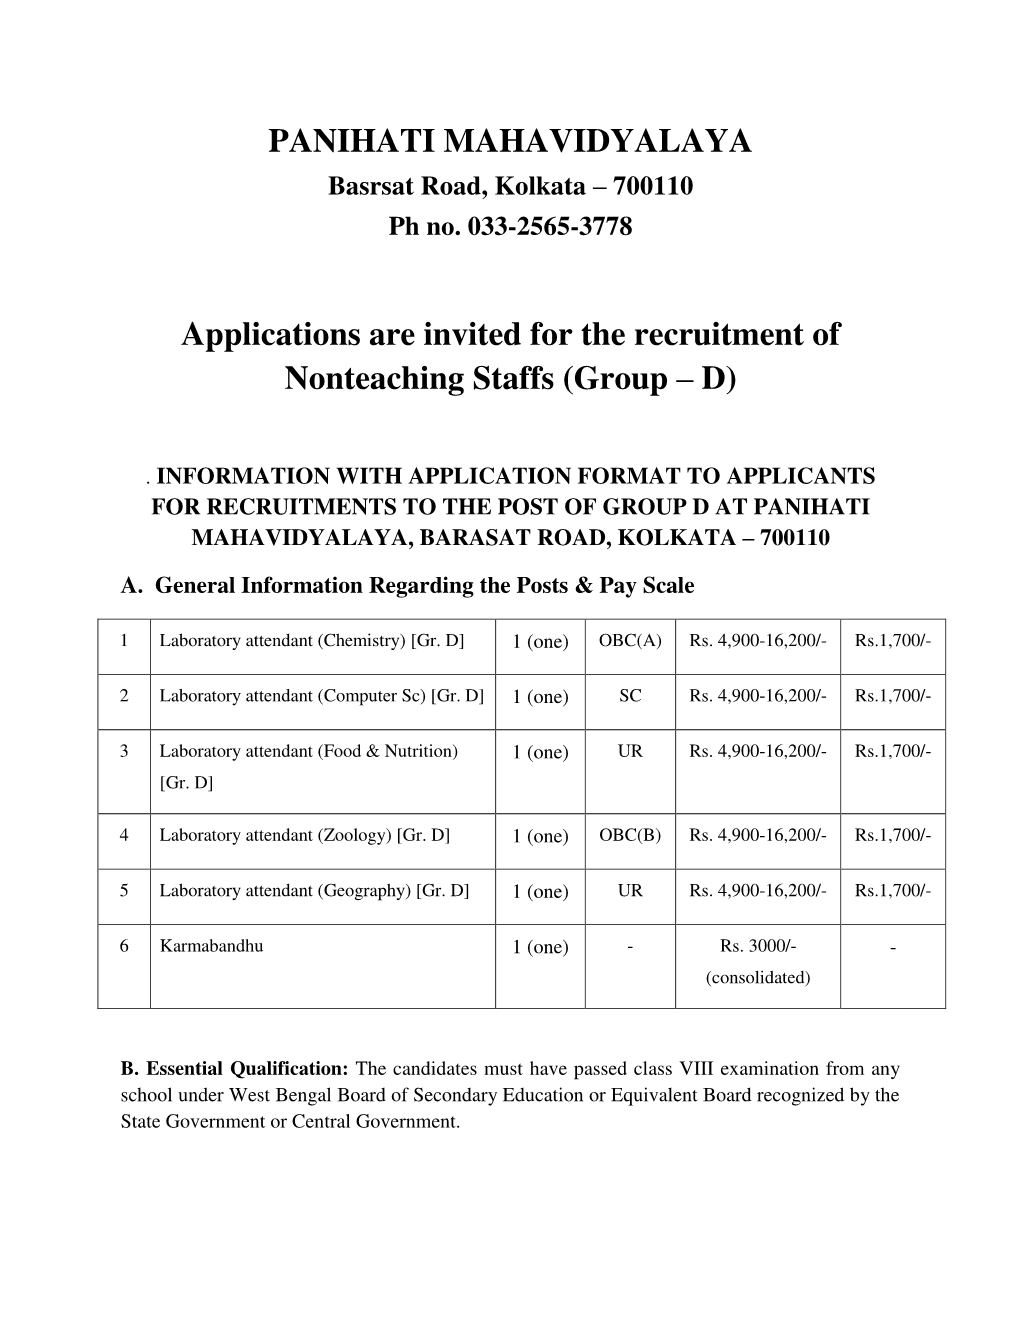 PANIHATI MAHAVIDYALAYA Applications Are Invited for The